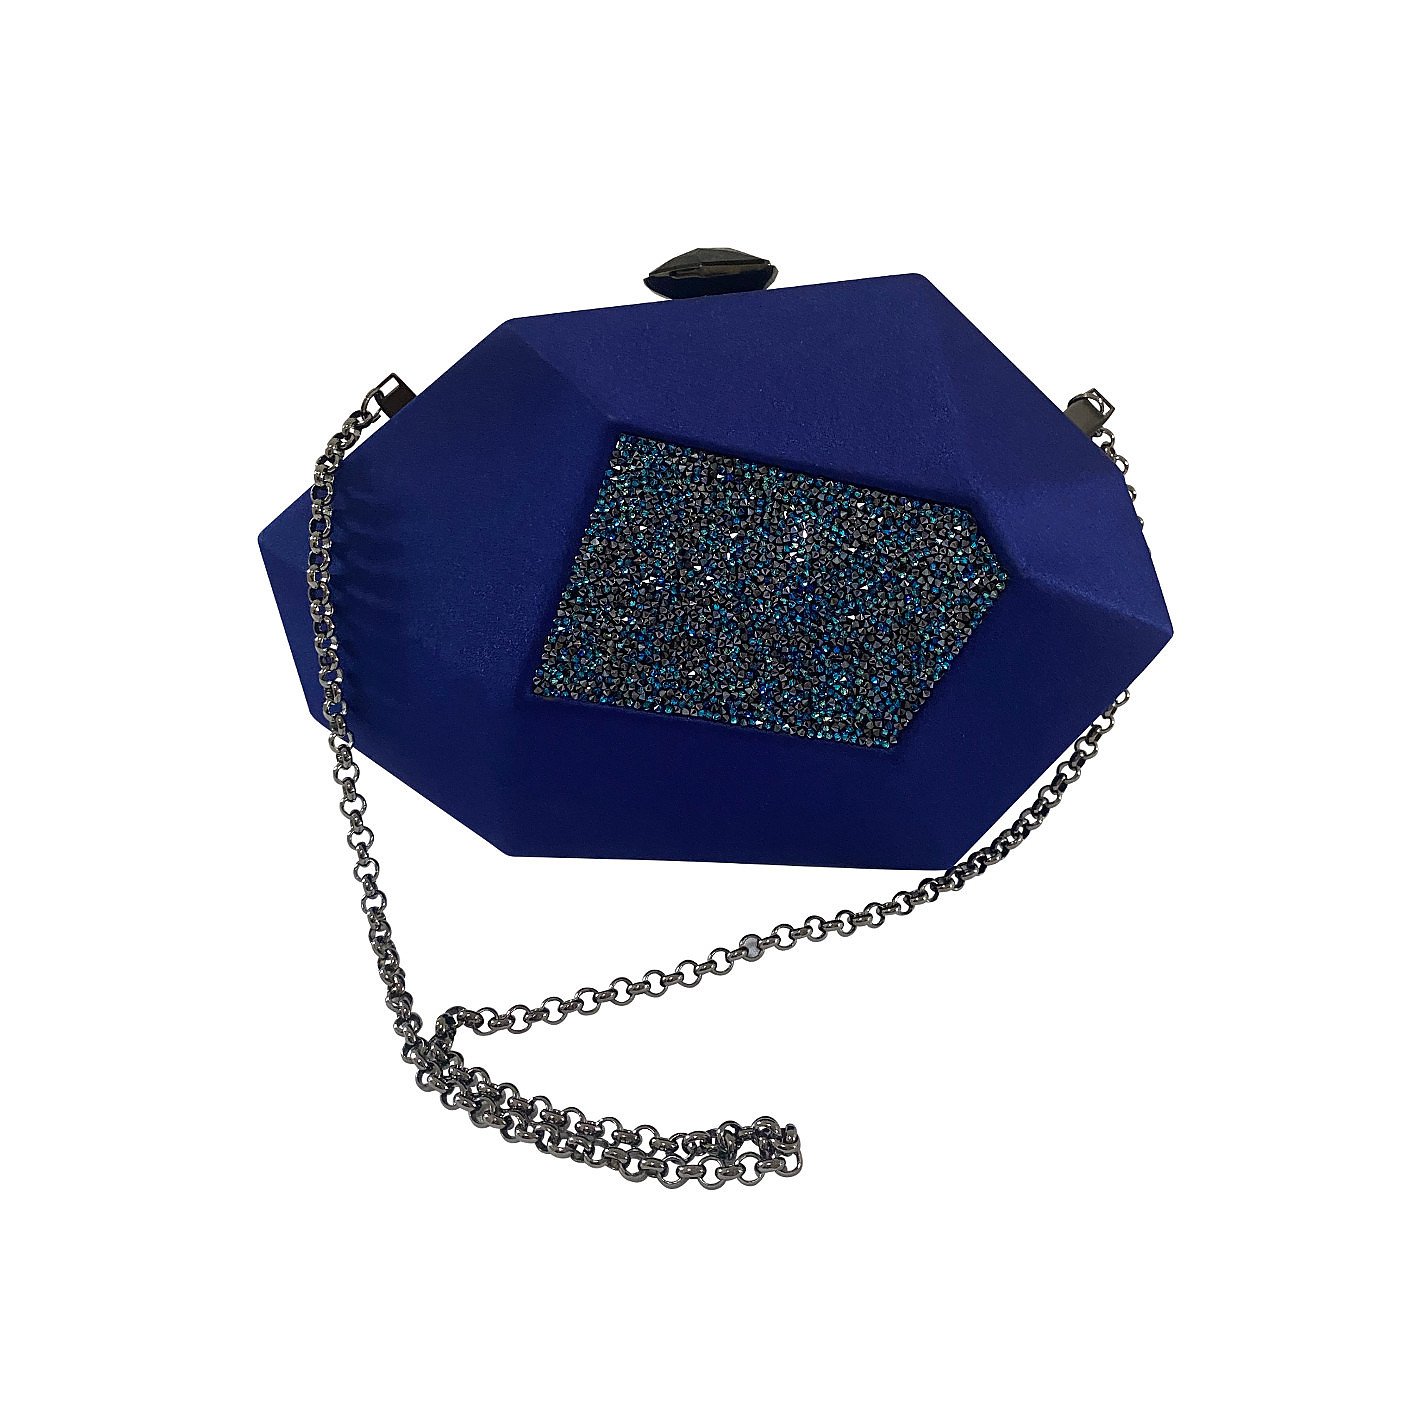 Atelier Swarovski Satin geometric clutch with crystal block shape and chain blue